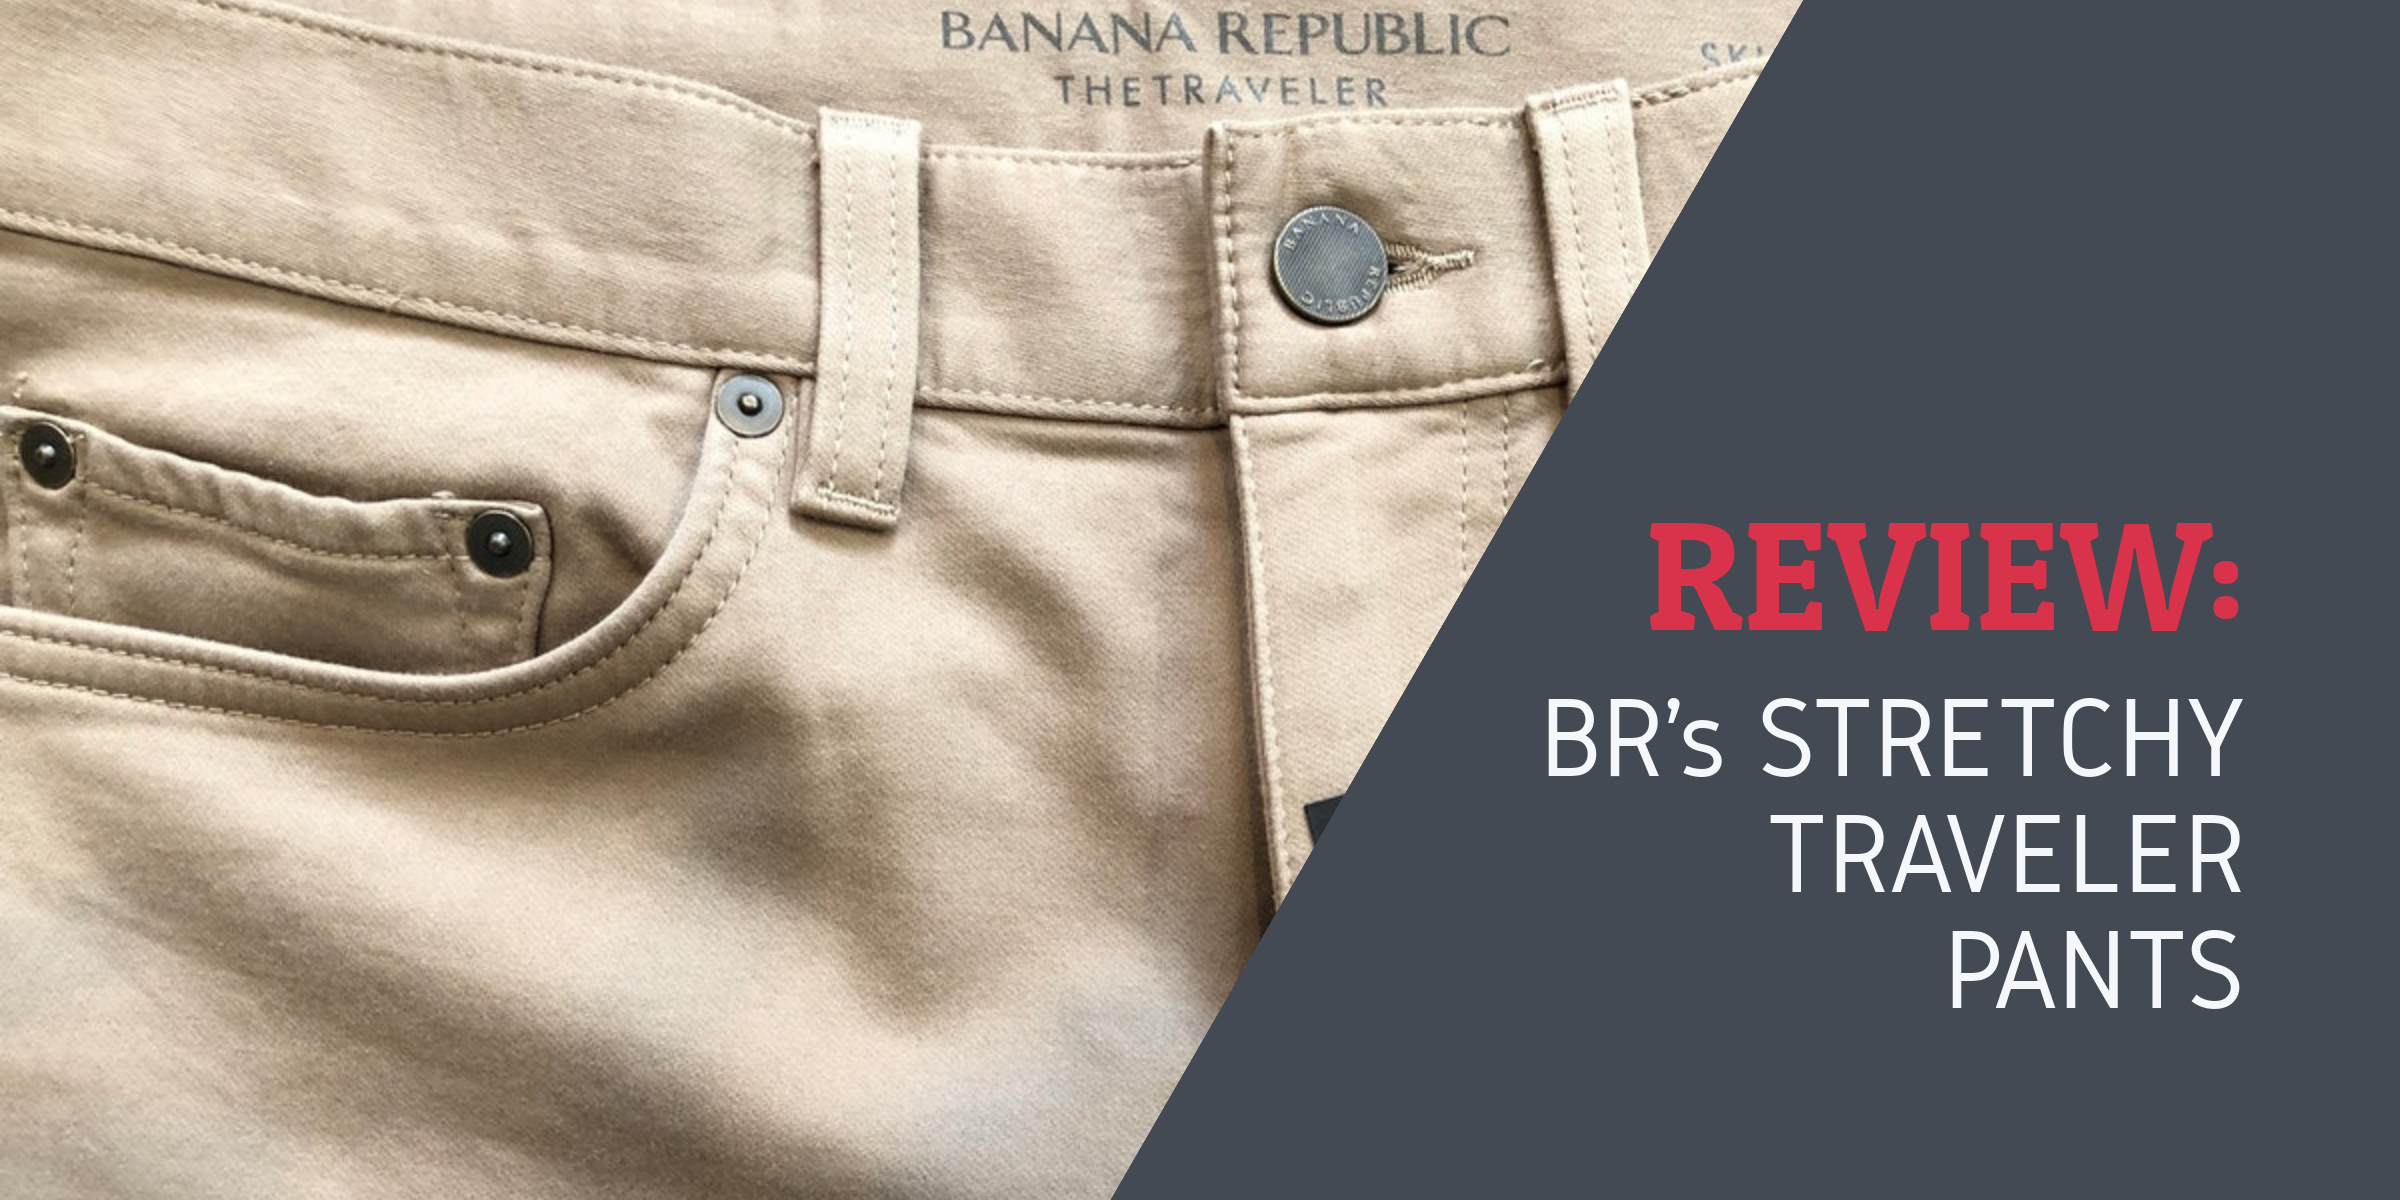 banana republic jeans price